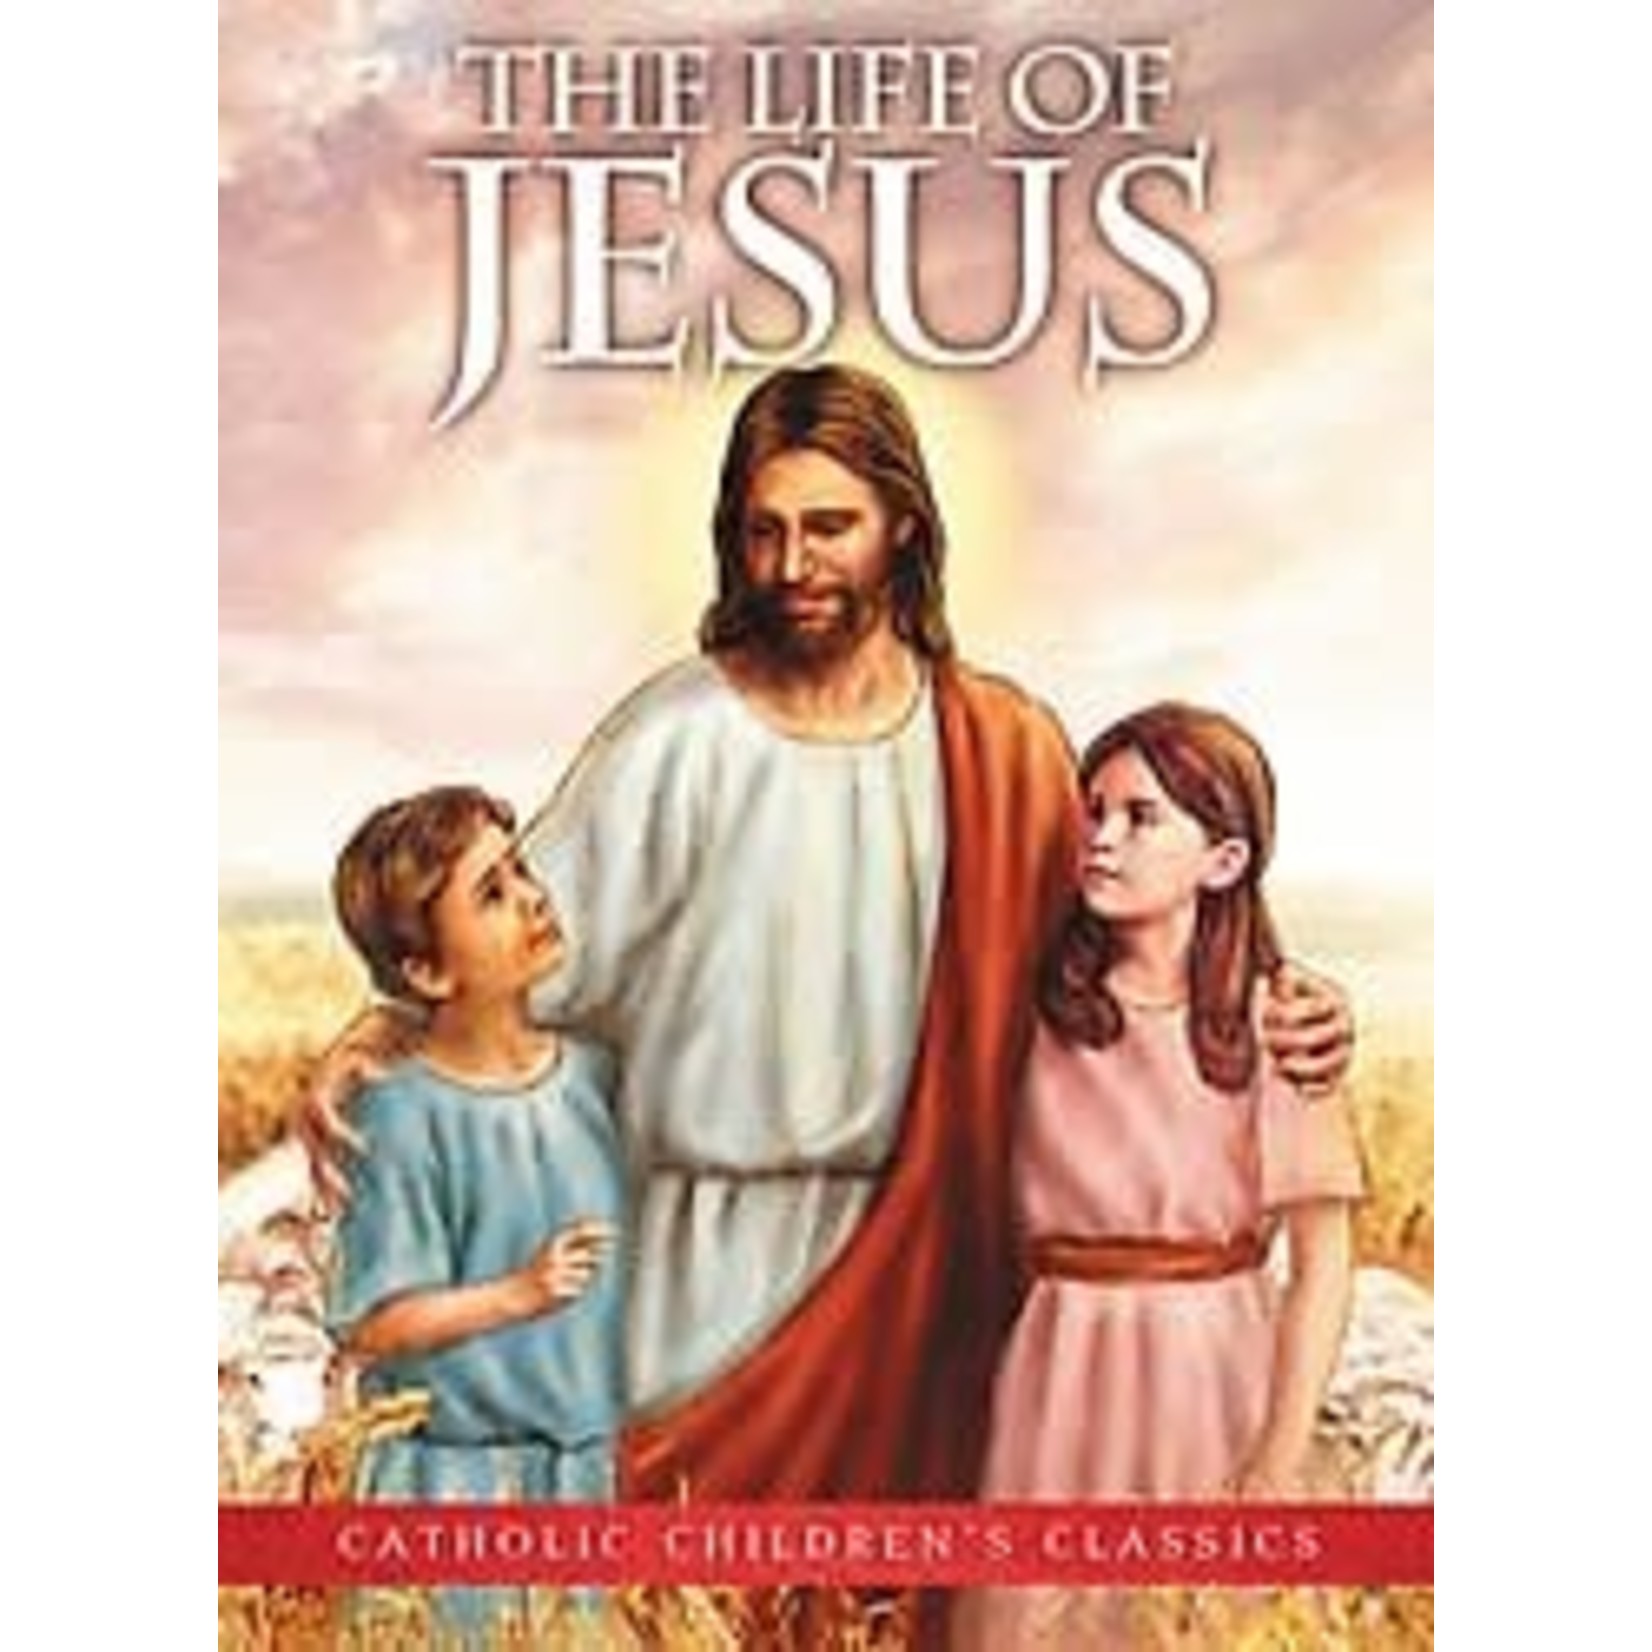 The Life of Jesus Catholic Children’s Classic